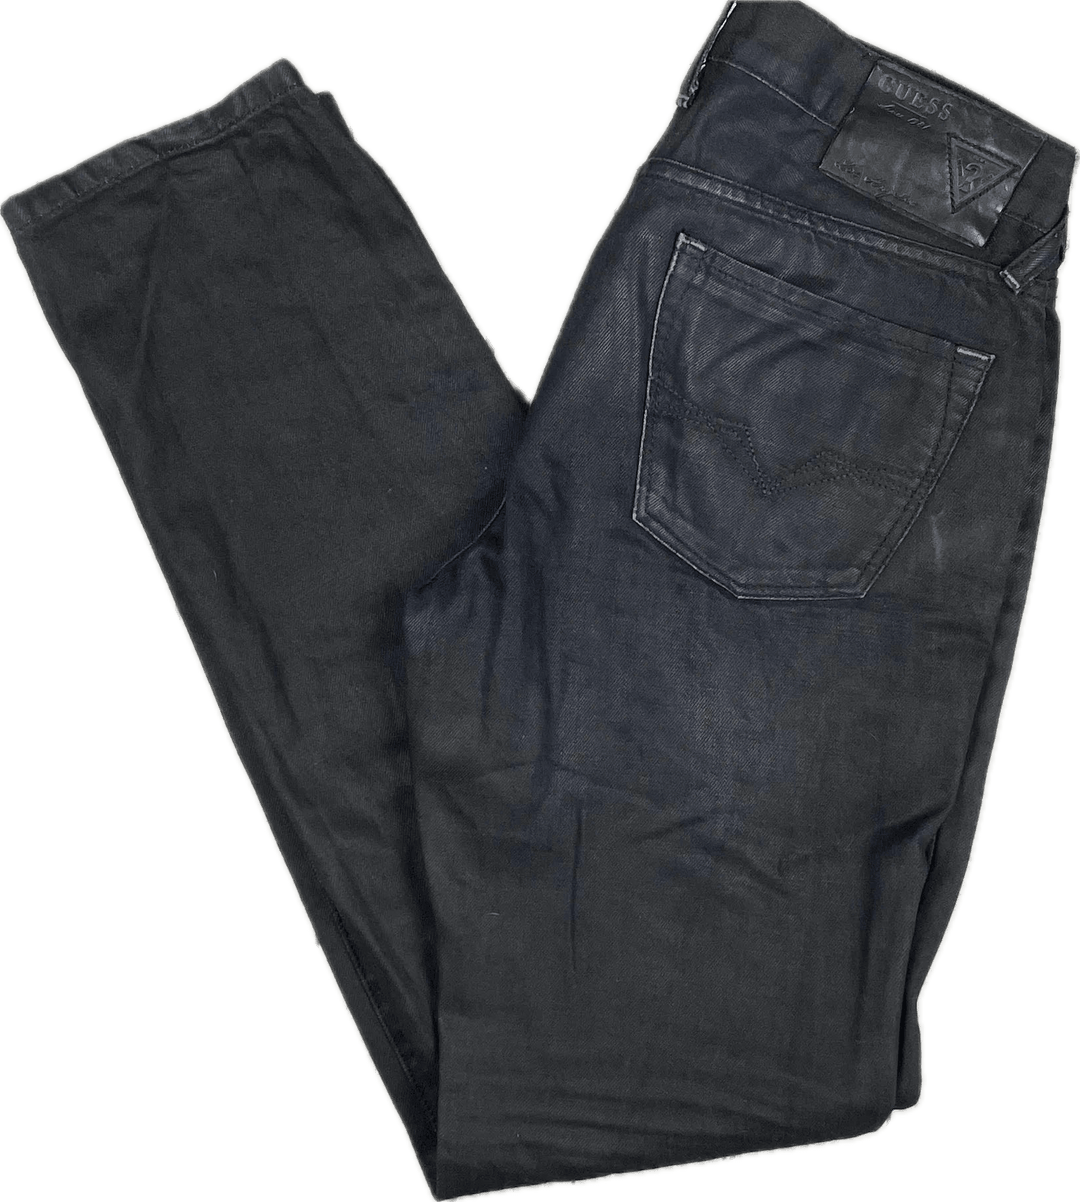 Guess 'Brit Rocker Narrow' Black Stretch Denim Jeans - Size 30/34 - Jean Pool